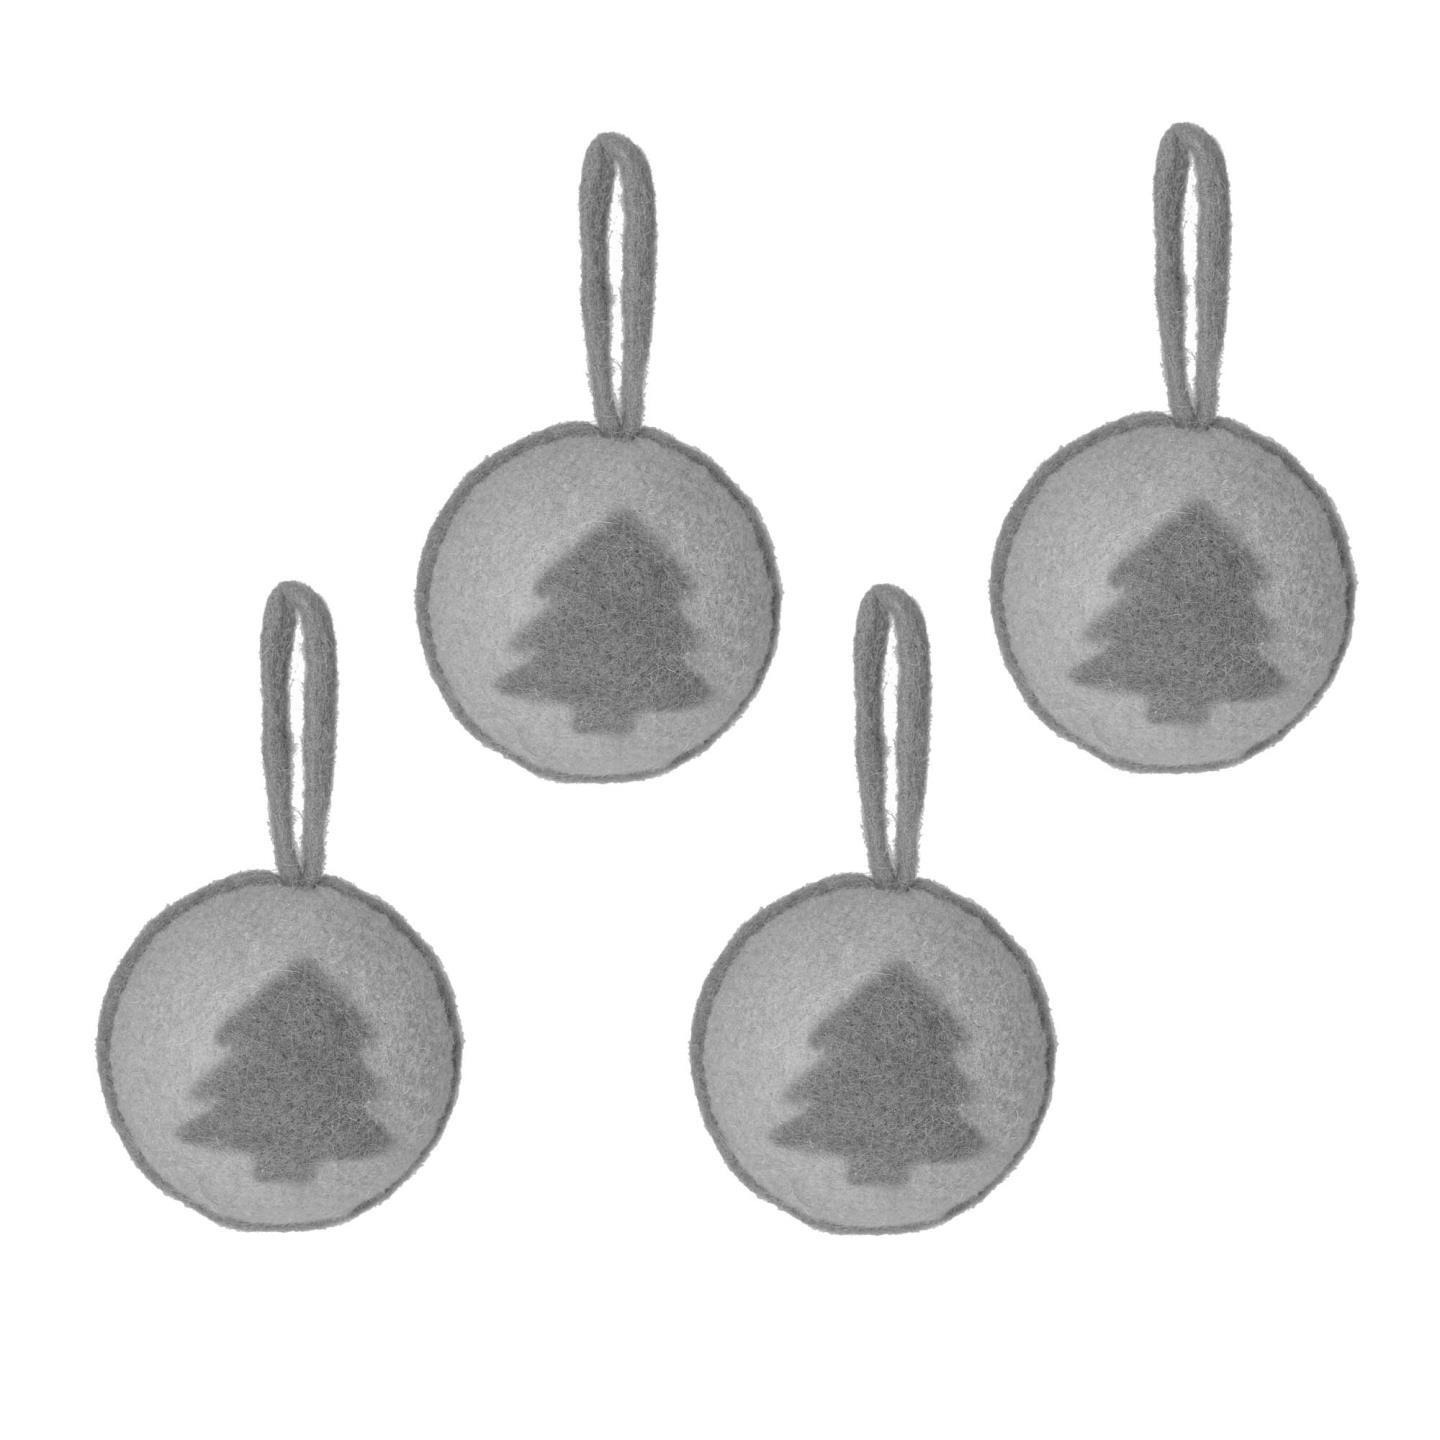 Ane set of 4 tree balls decorations